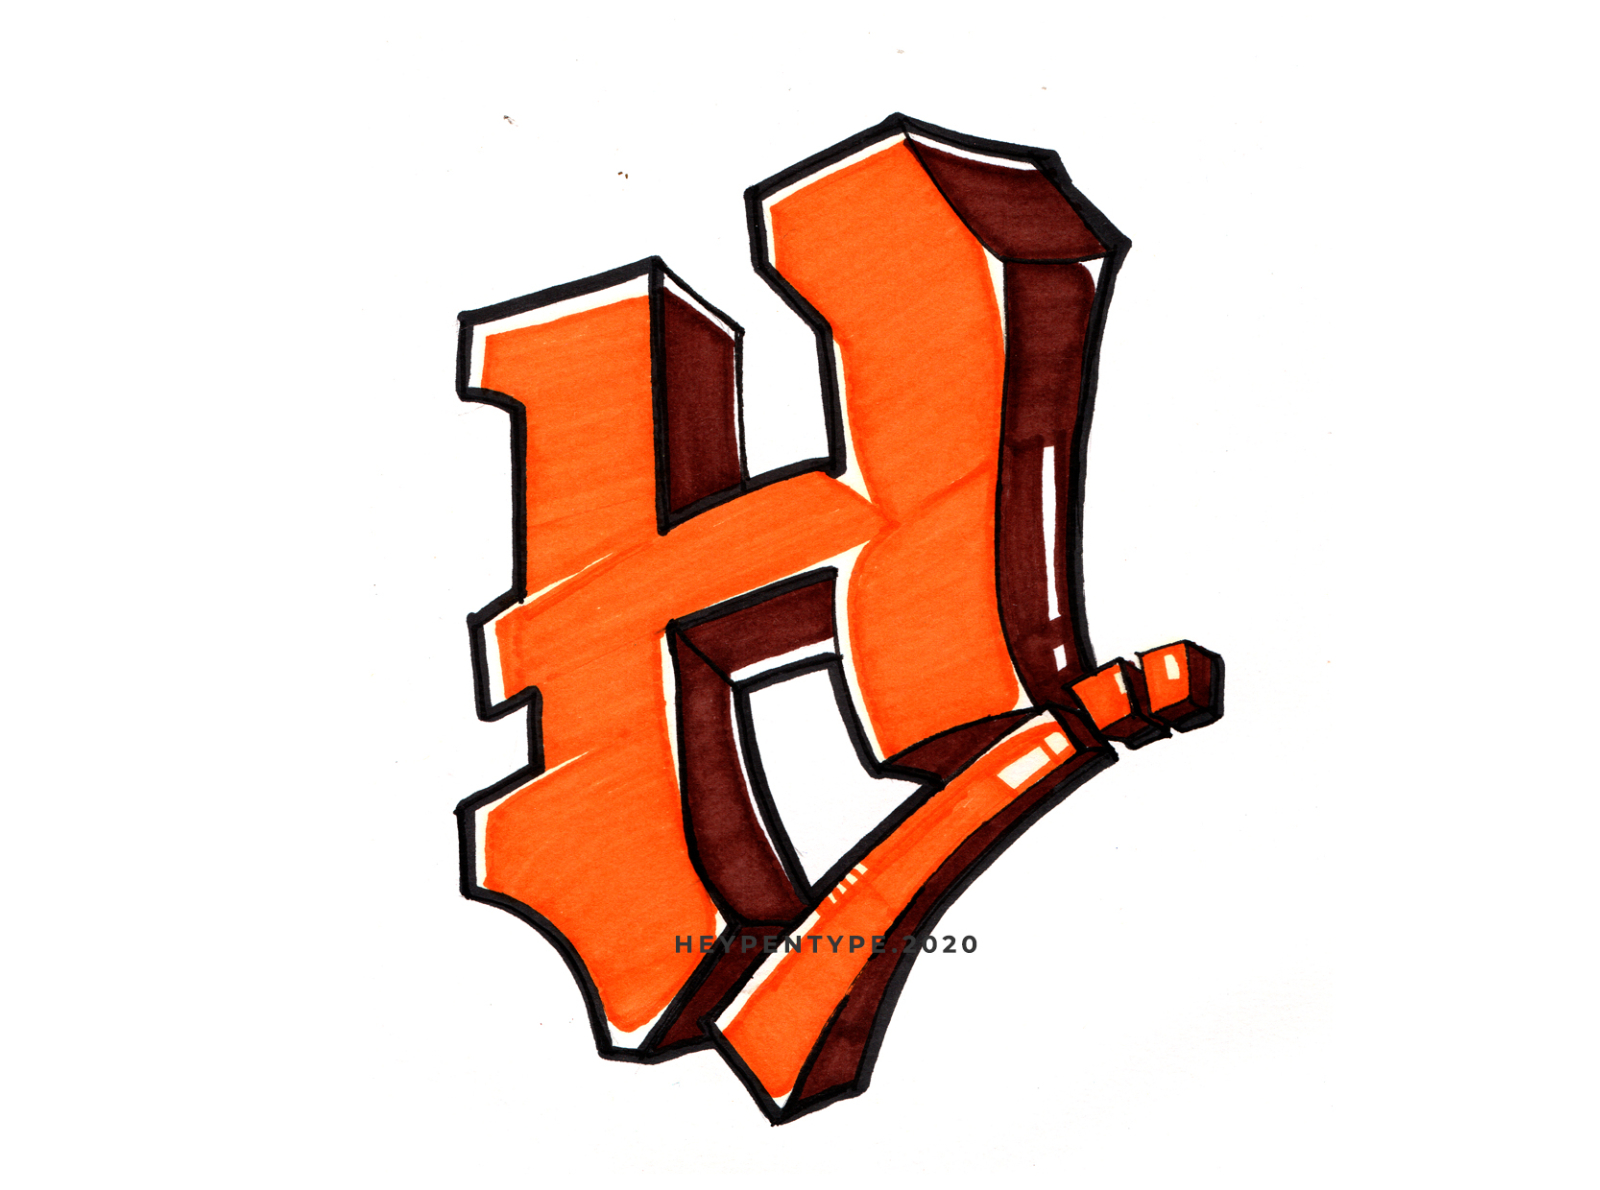 graffiti letter h